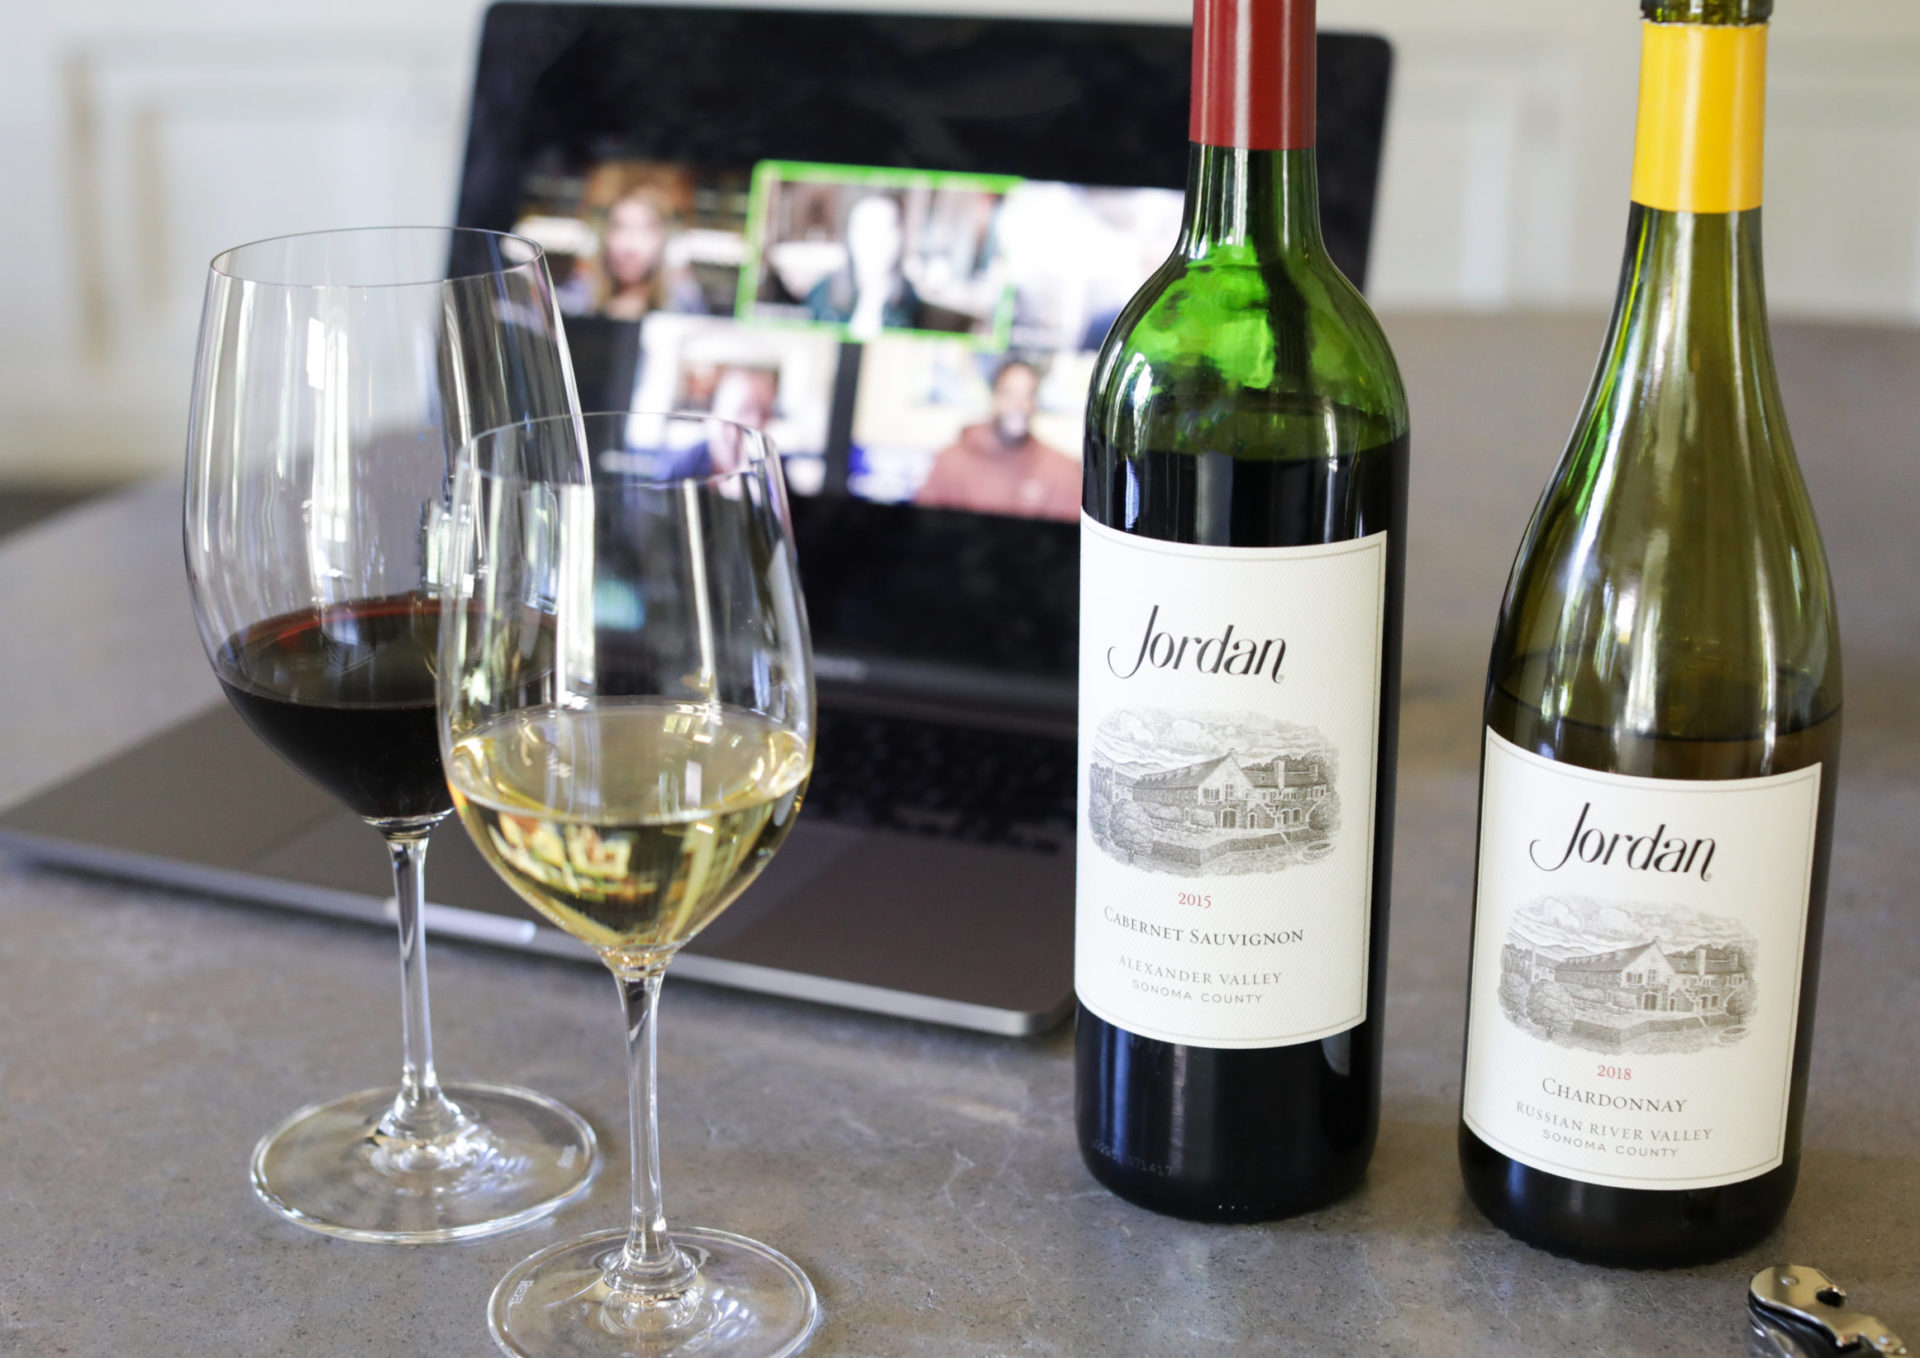 jordan cabernet and chardonnay bottles in front of laptop for virtual tasting